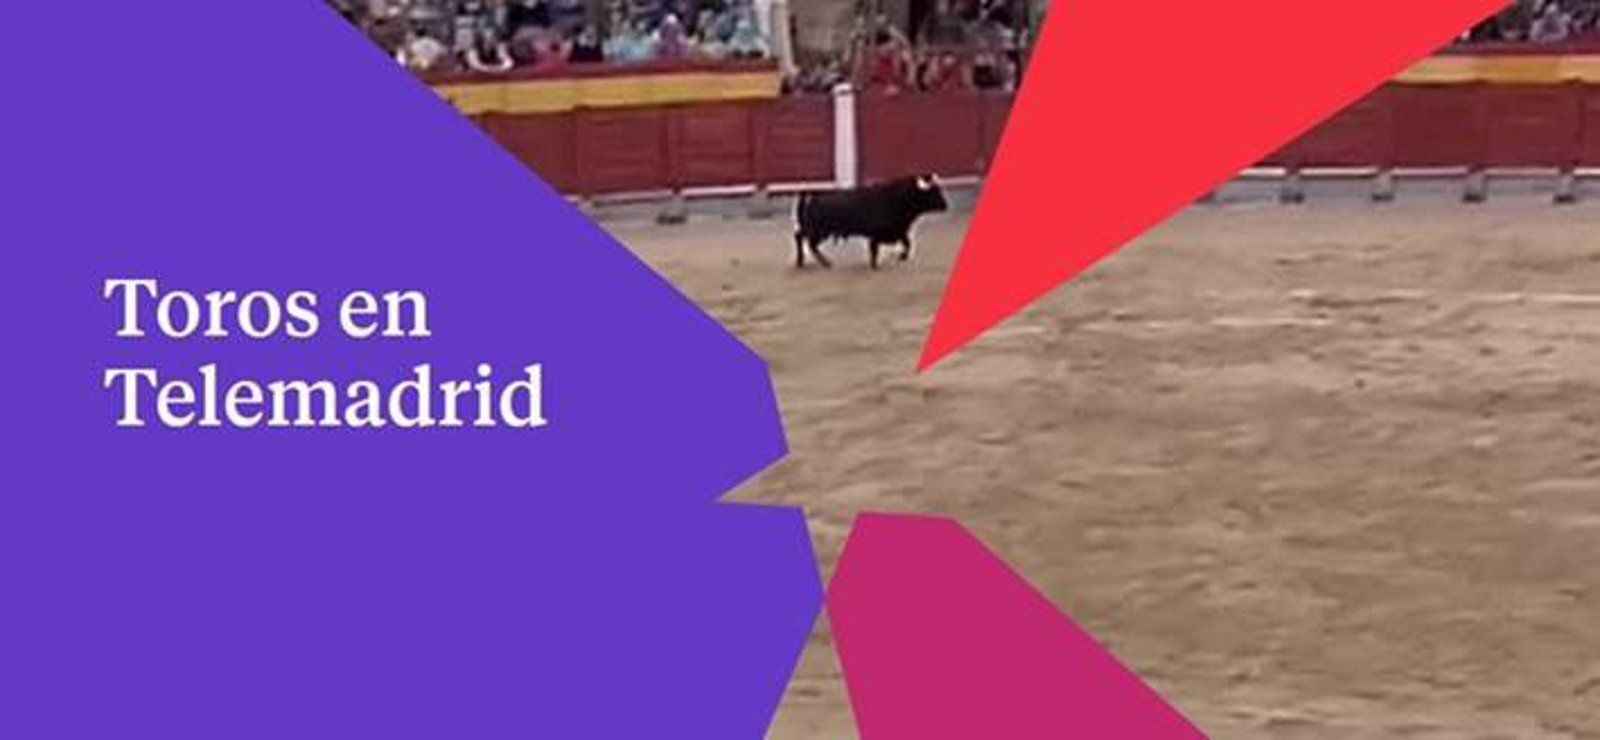 Telemadrid retransmitirá 16 festejos taurinos de la Feria de San Isidro